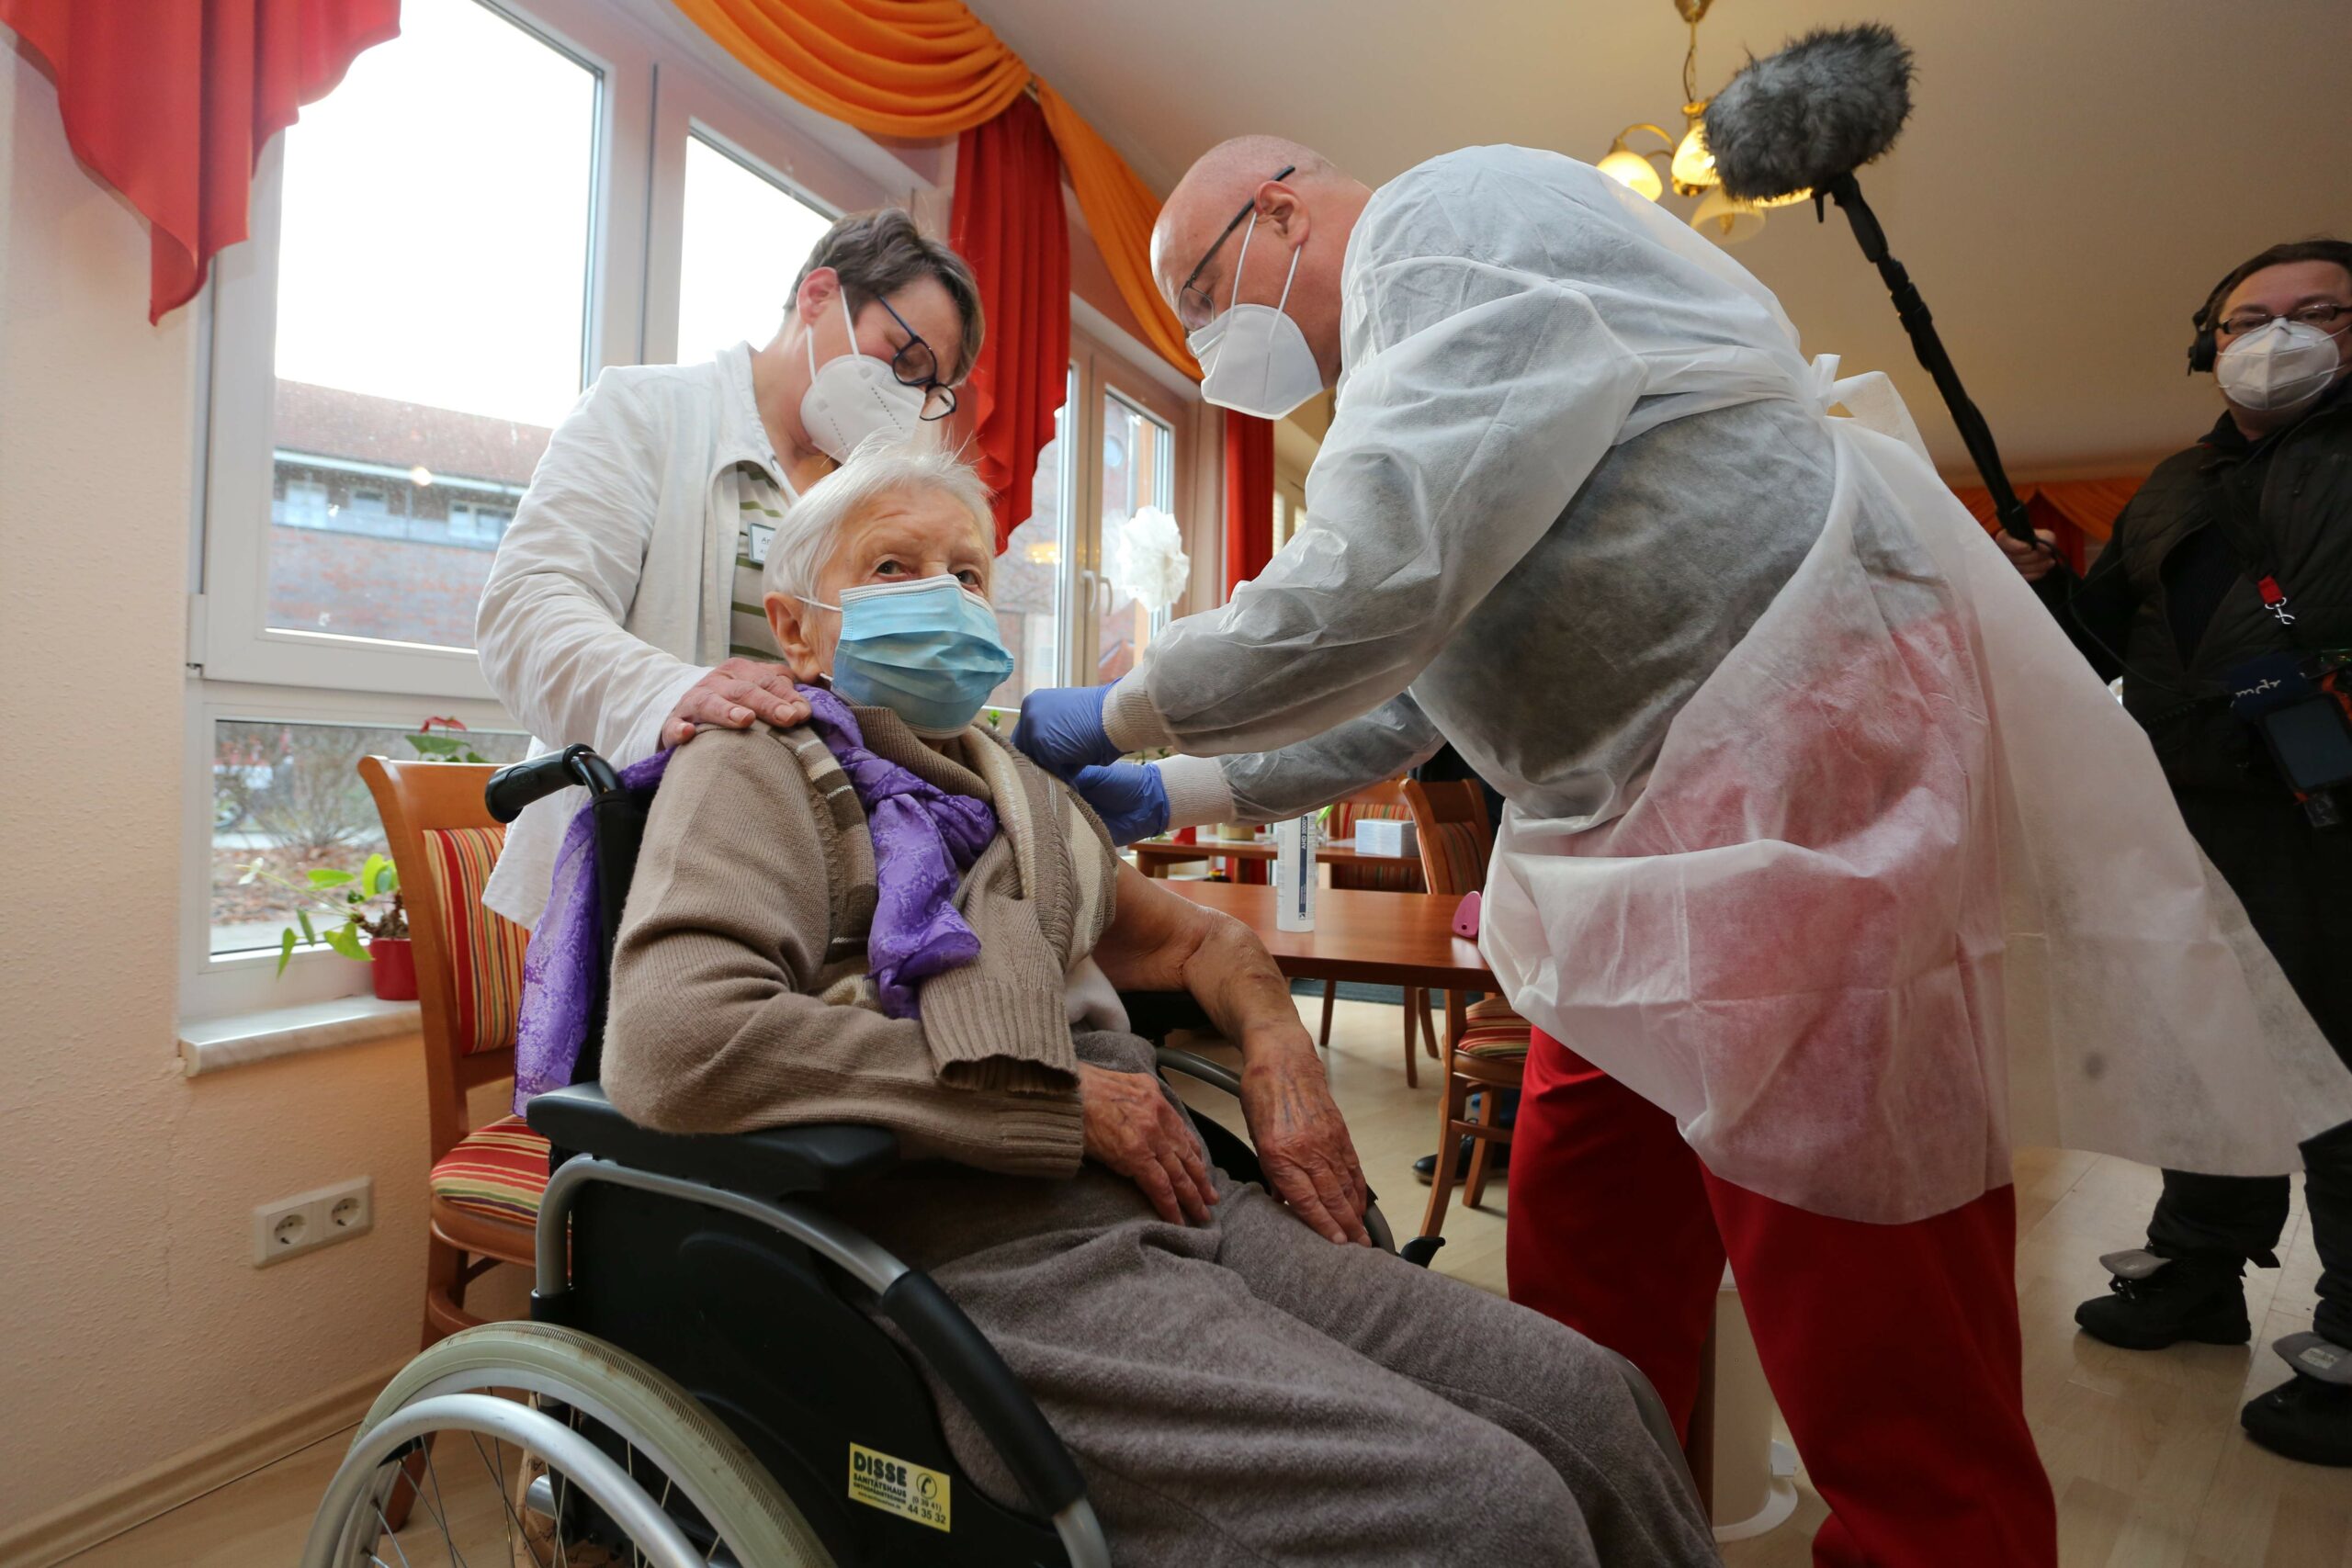 Эдит Квойзаллу ставят прививку. Фото Matthias Bein / dpa / AFP/Scanpix/Leta